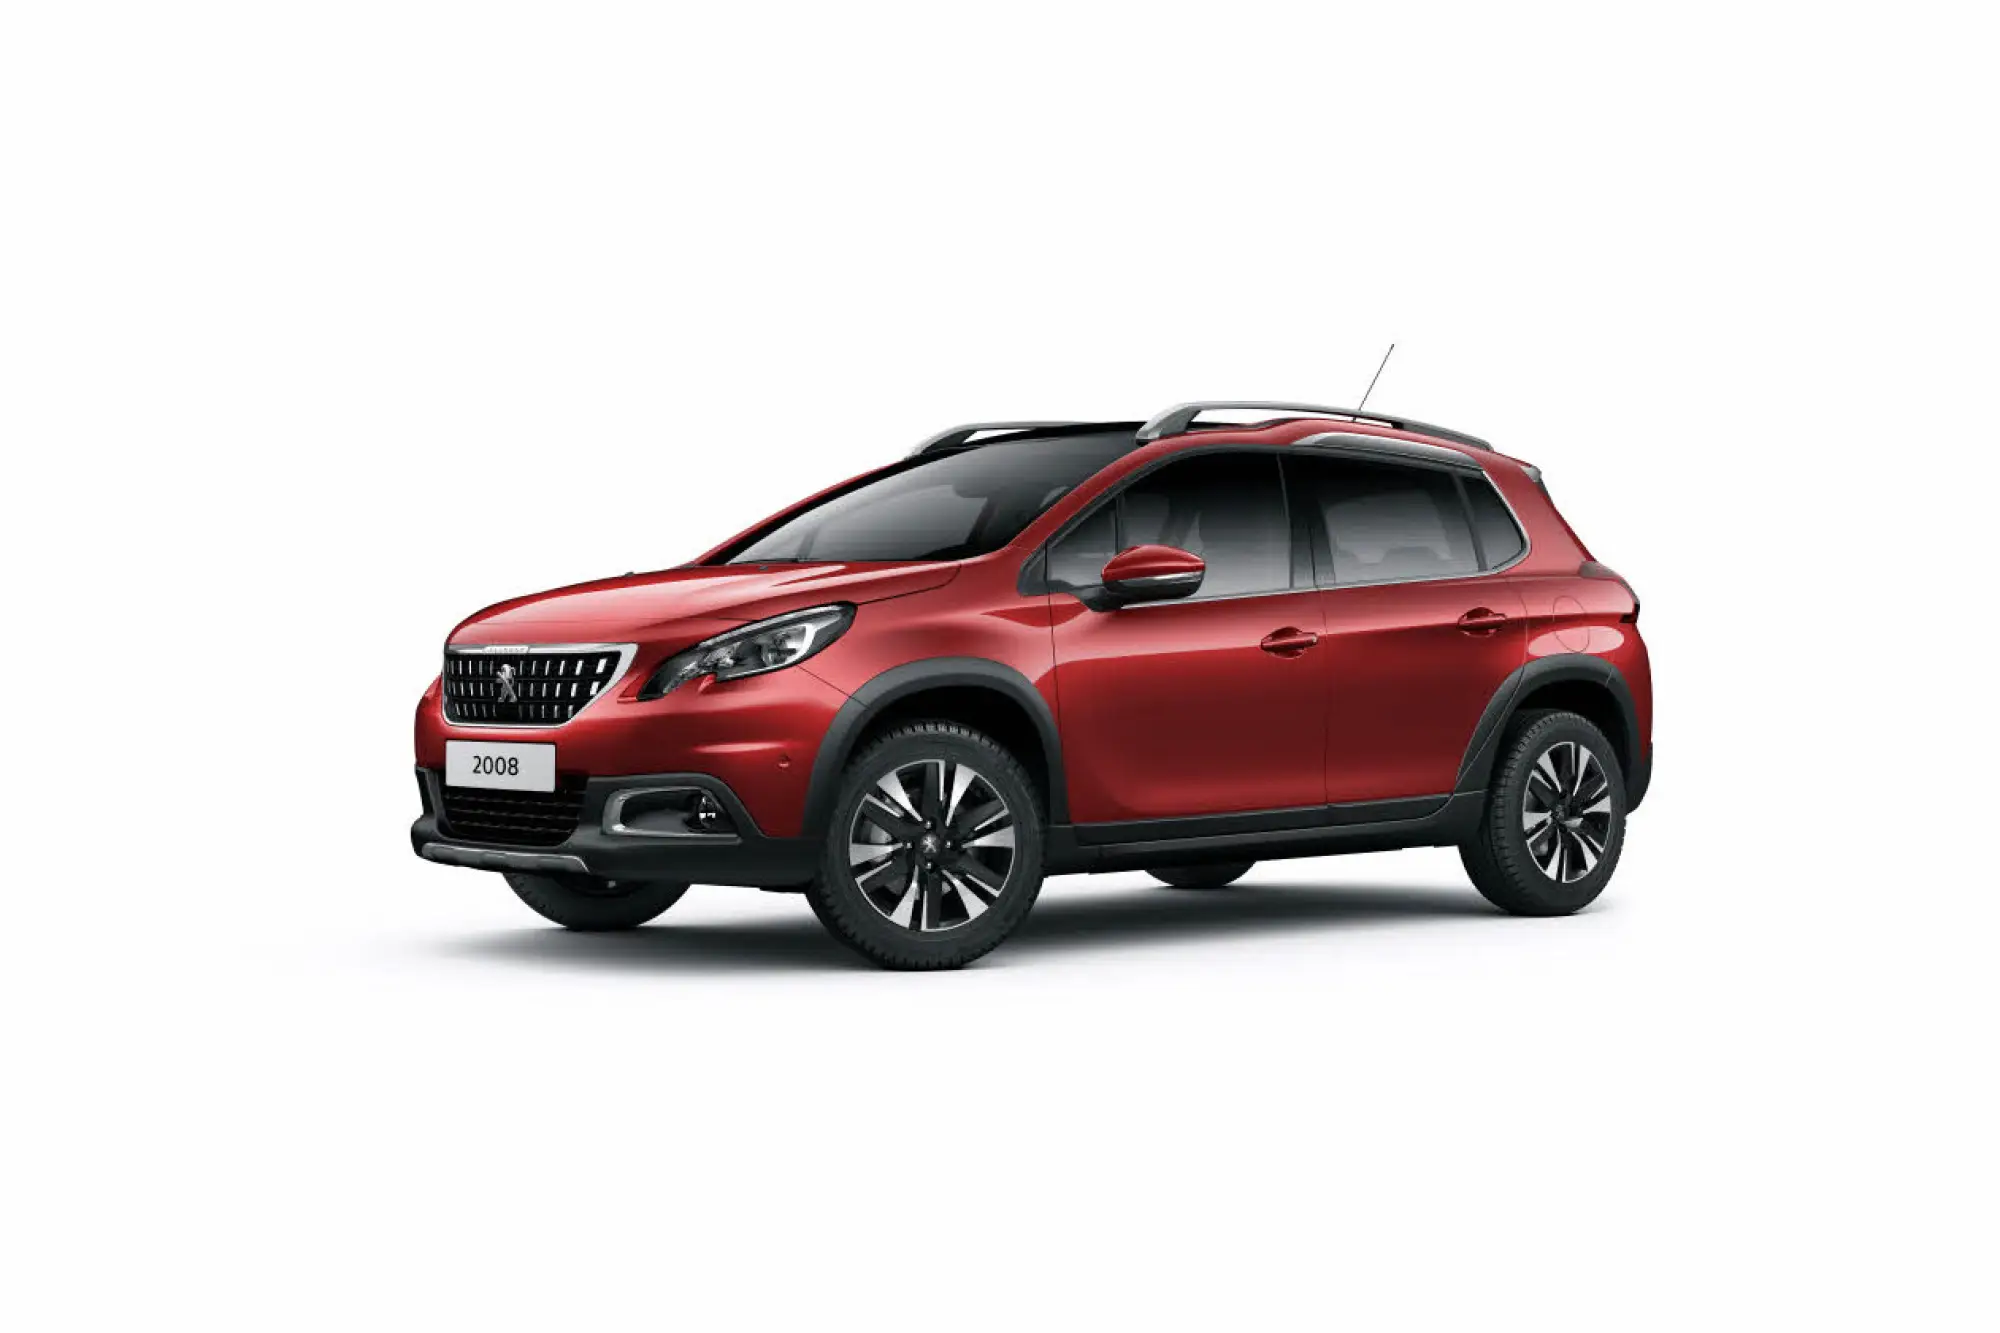 Peugeot 2008 MY 2016 - 45